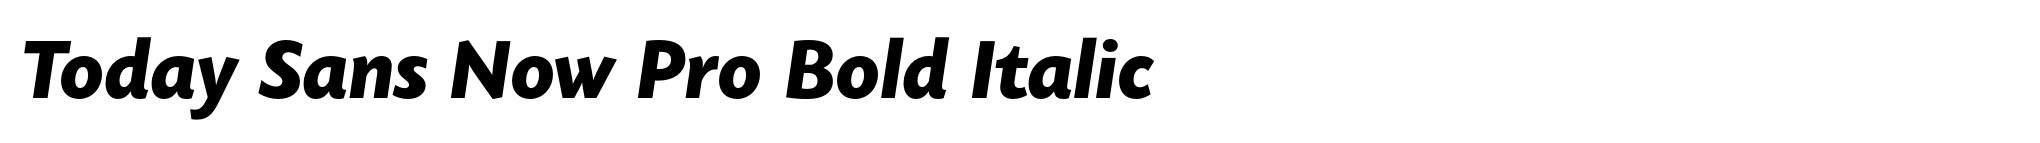 Today Sans Now Pro Bold Italic image